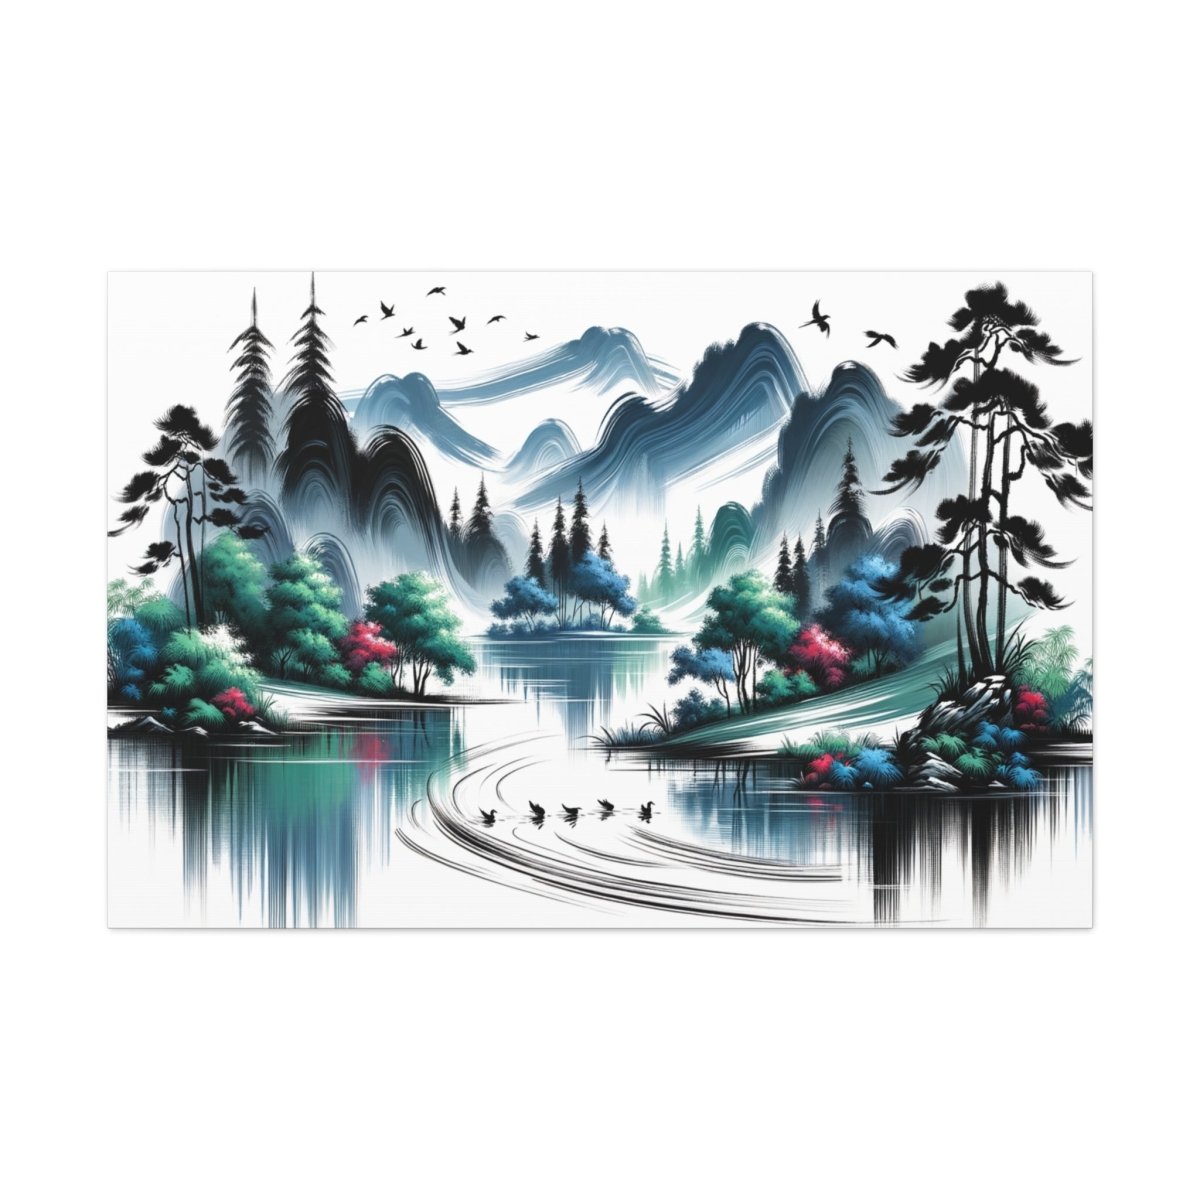 Serenity Peaks Reflection - Chinese Wall Art